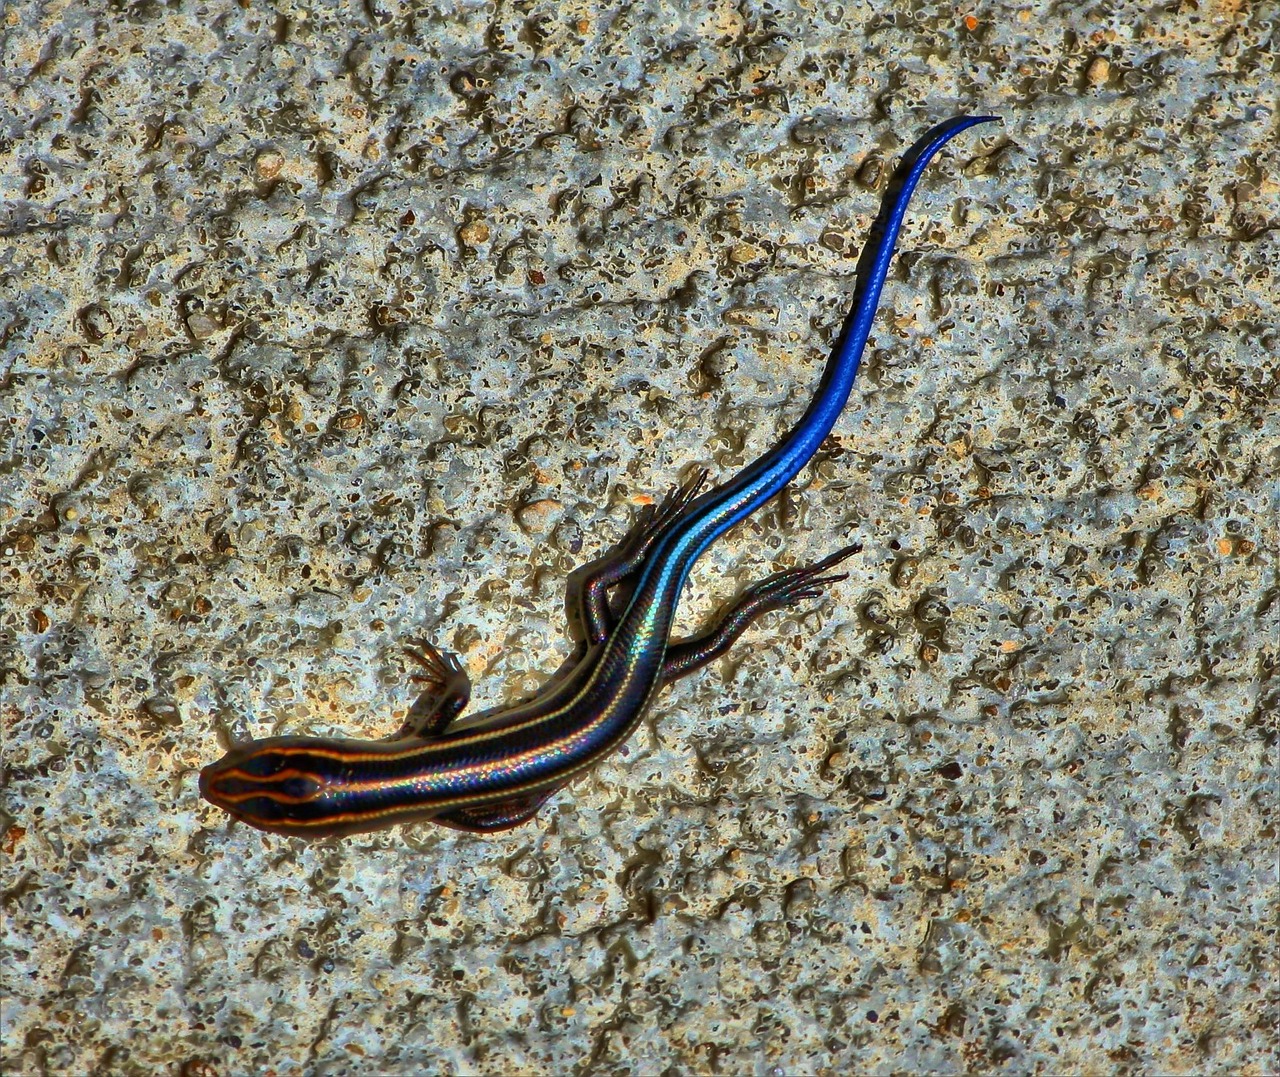 skink blue tailed lizard free photo